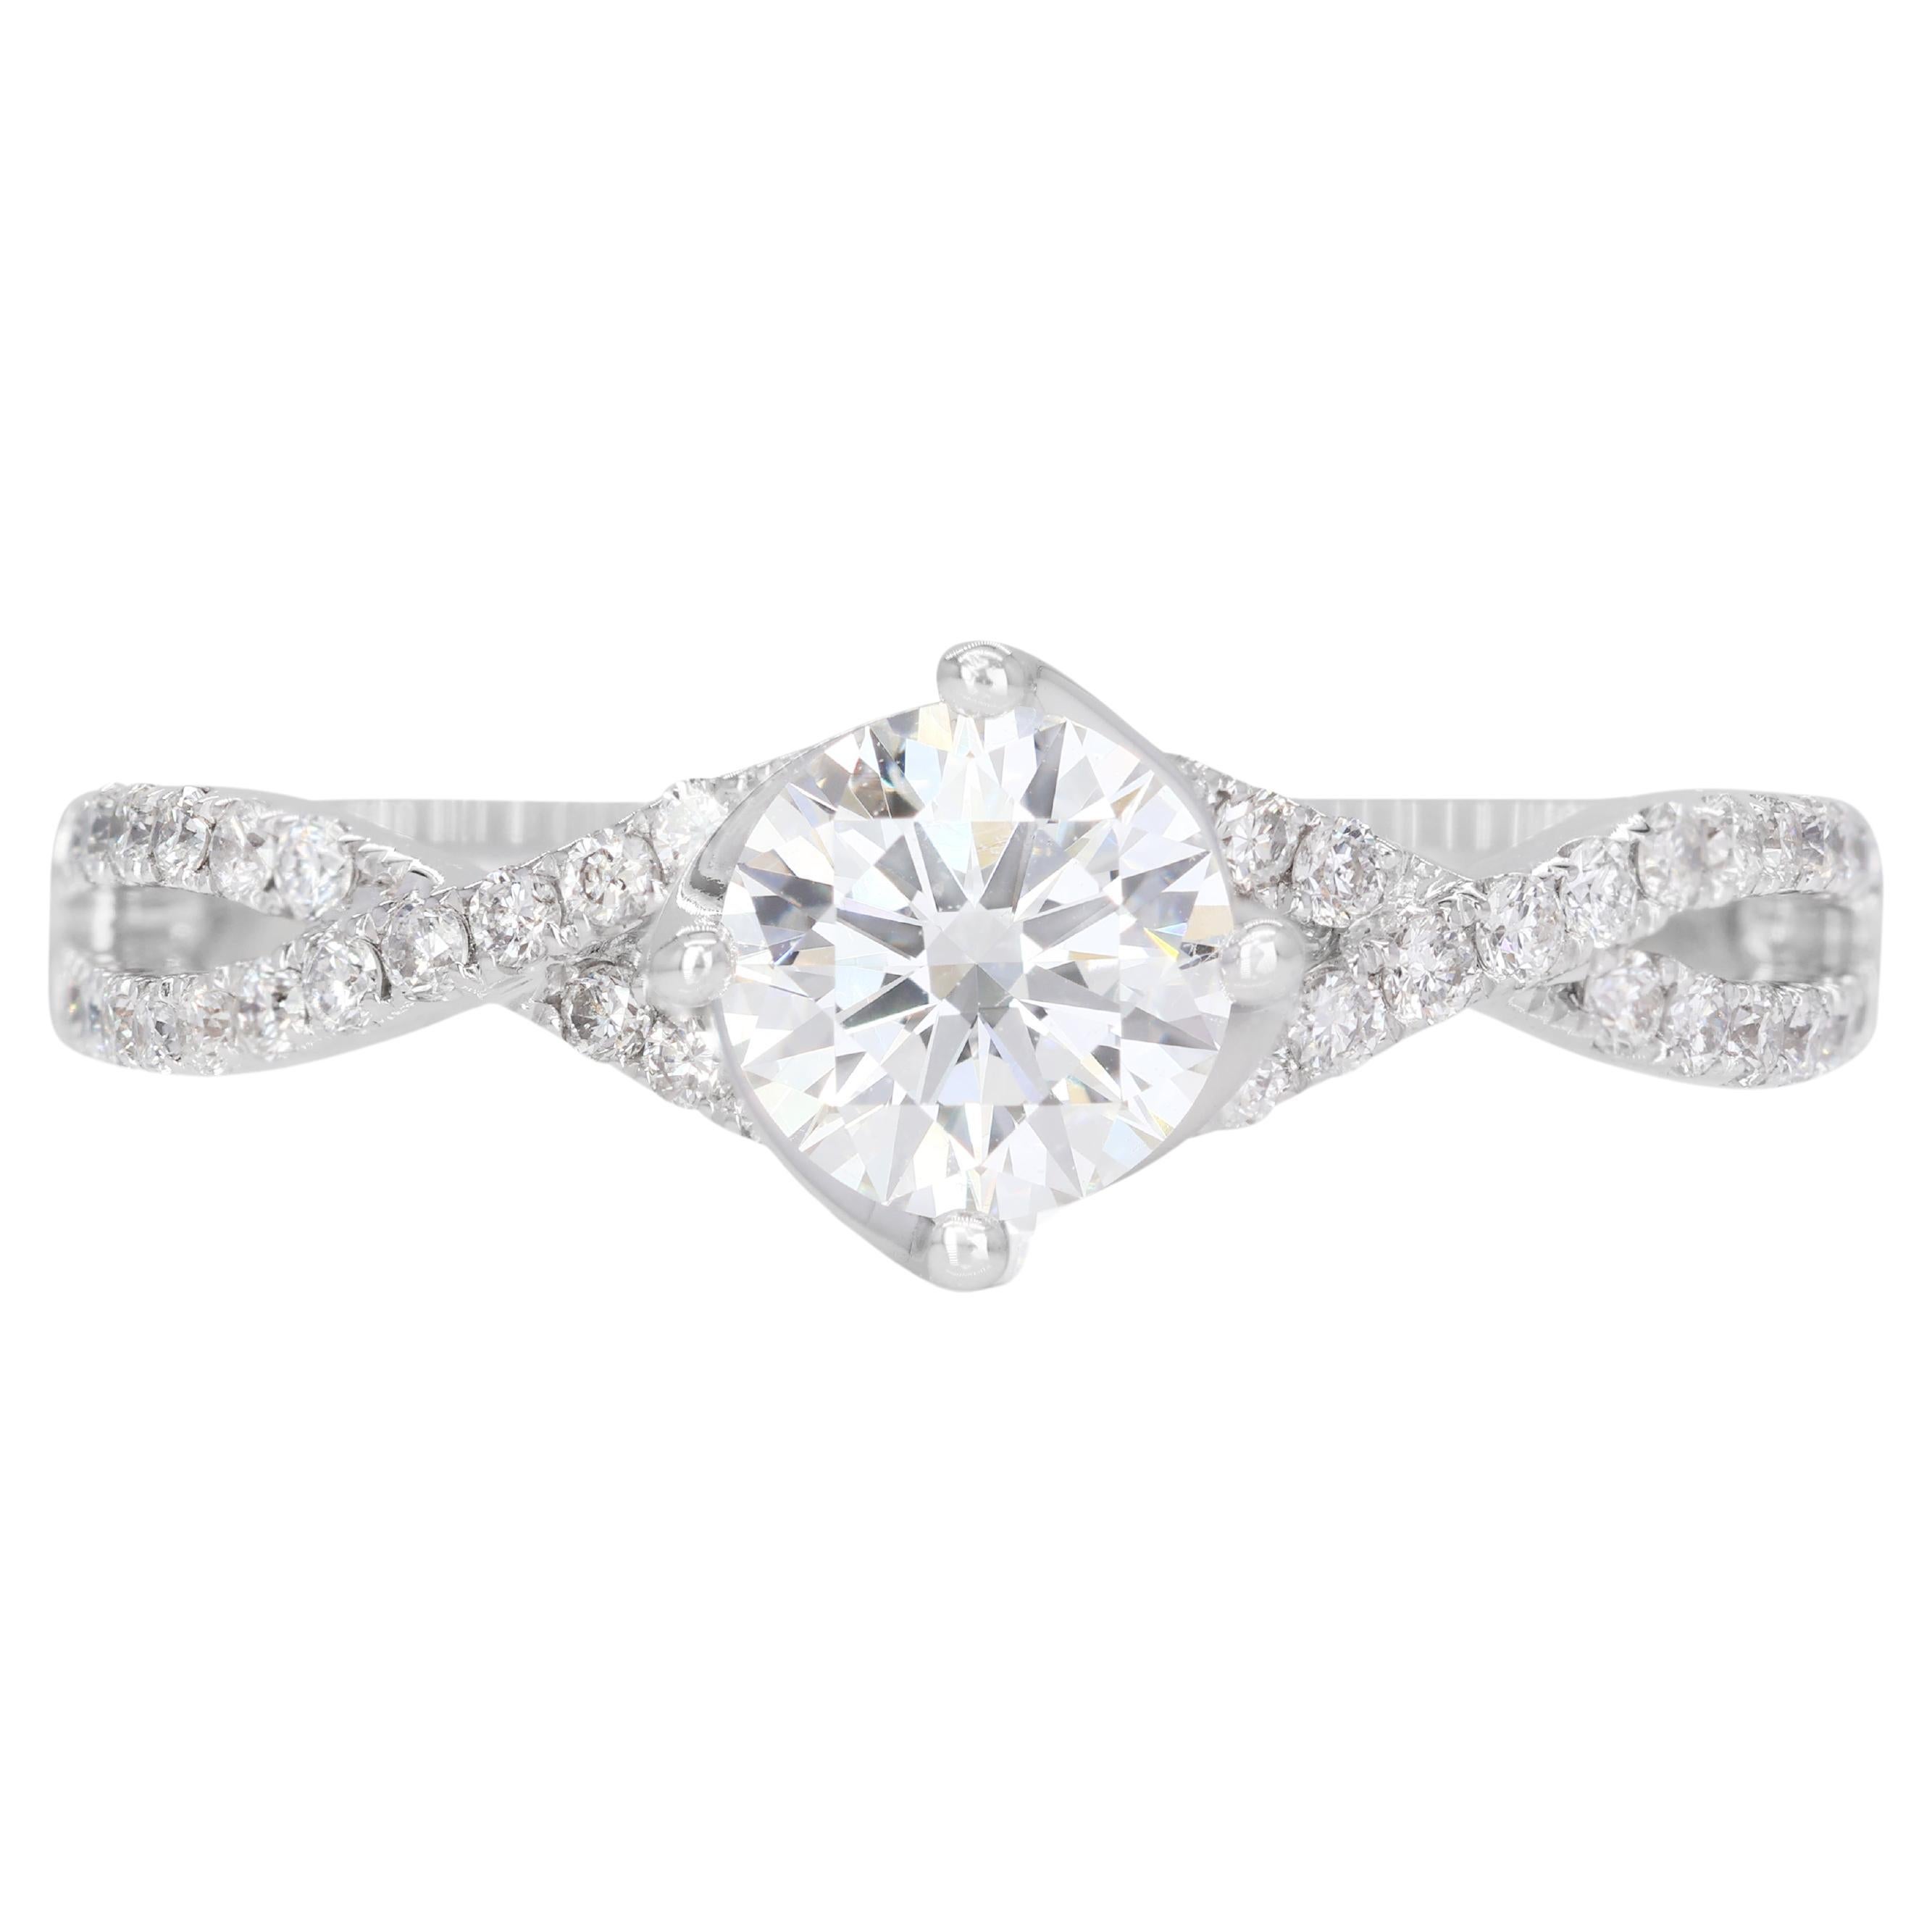 Elegant 0.70ct Diamond Halo Ring set in 18K White Gold